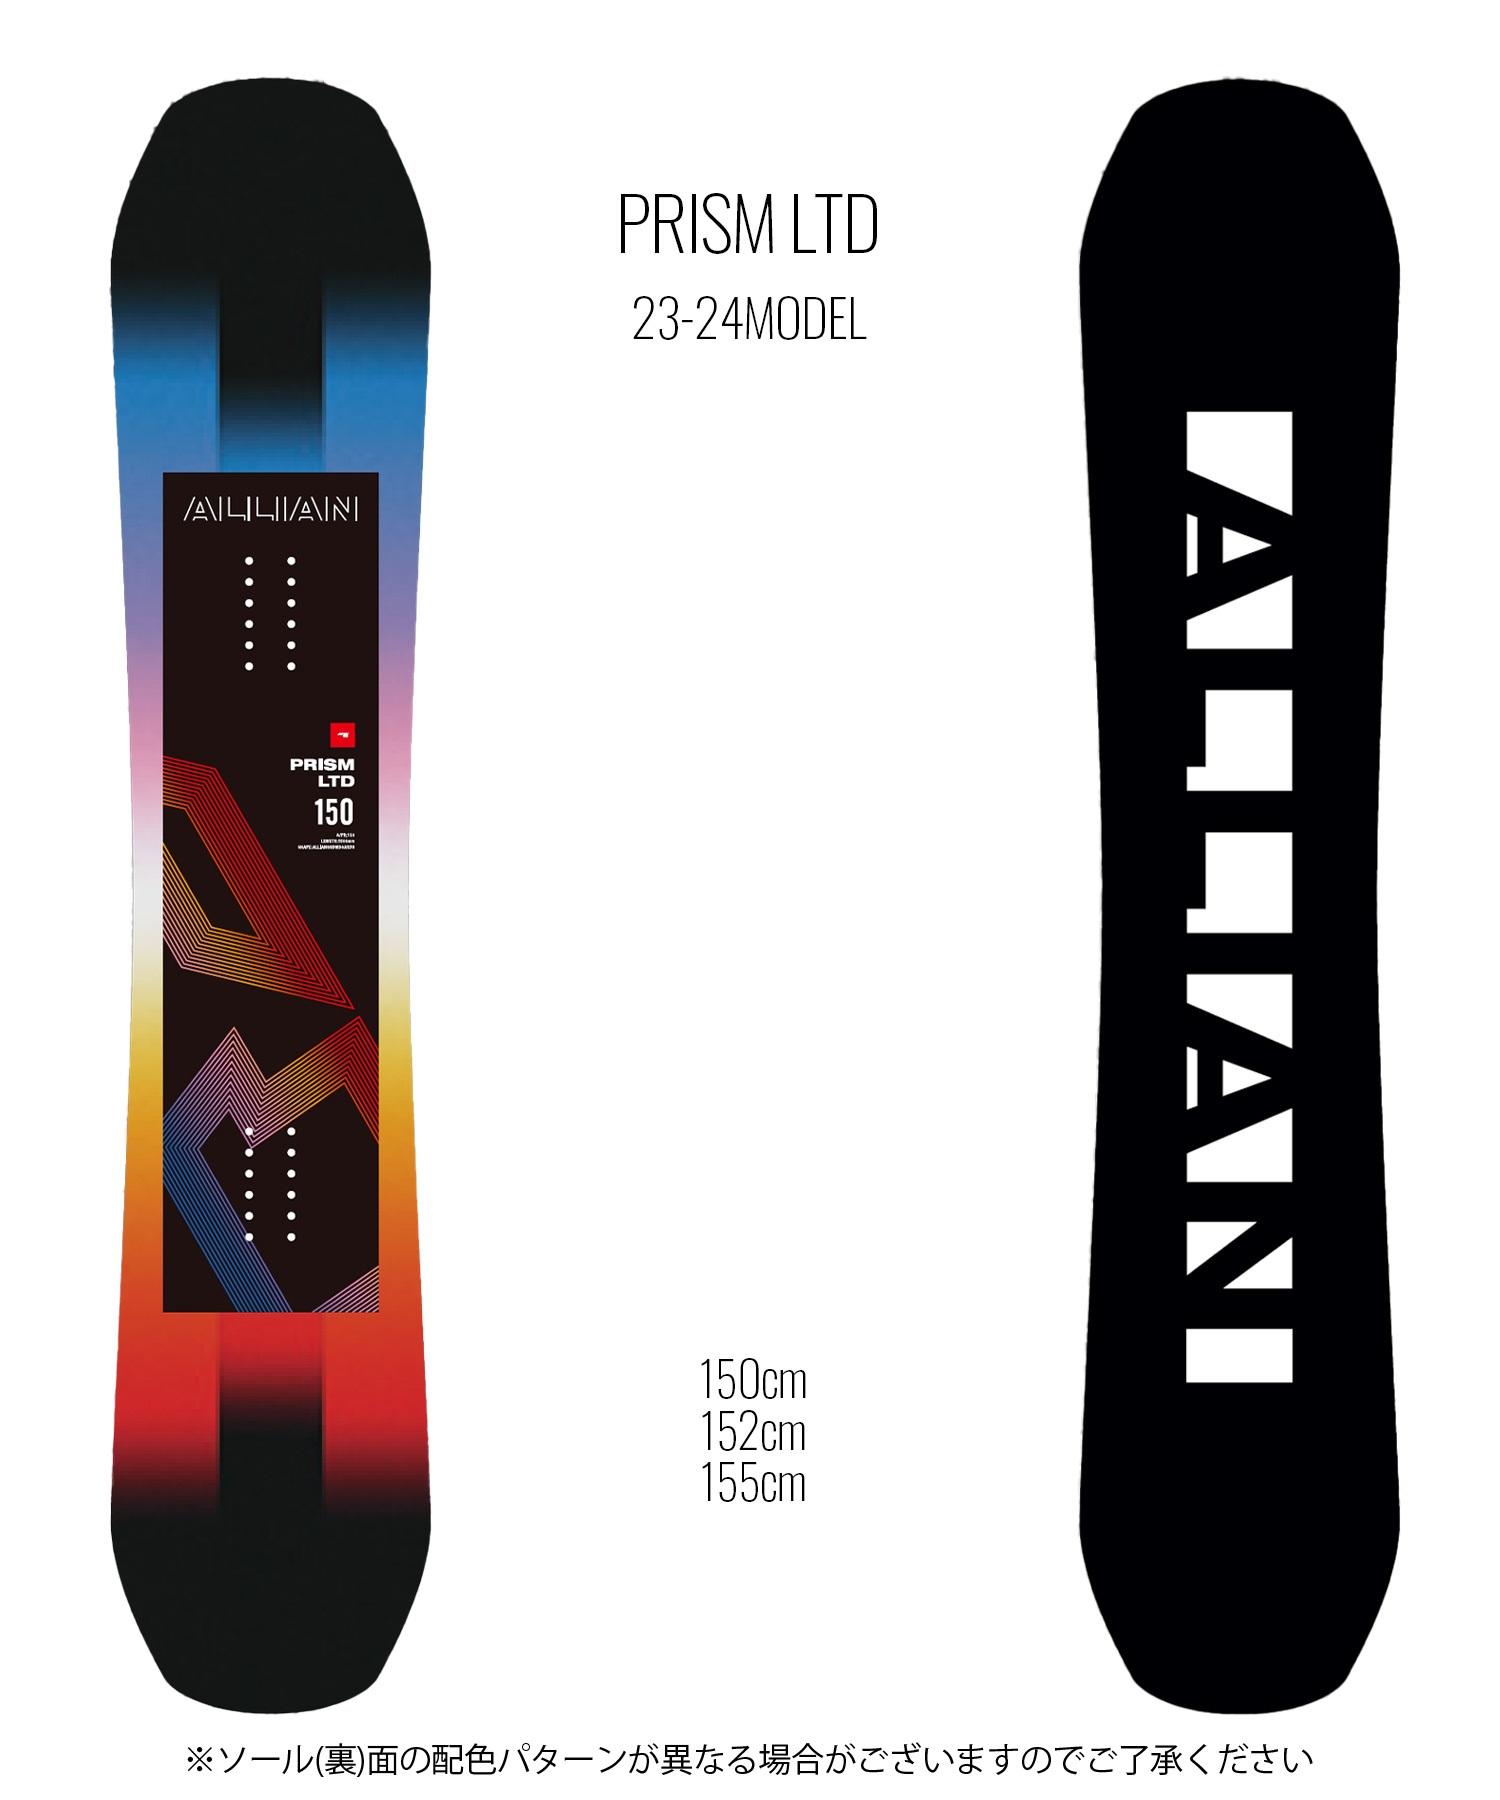 ALLIAN PRISM INVISIBLE アライアン プリズム 155